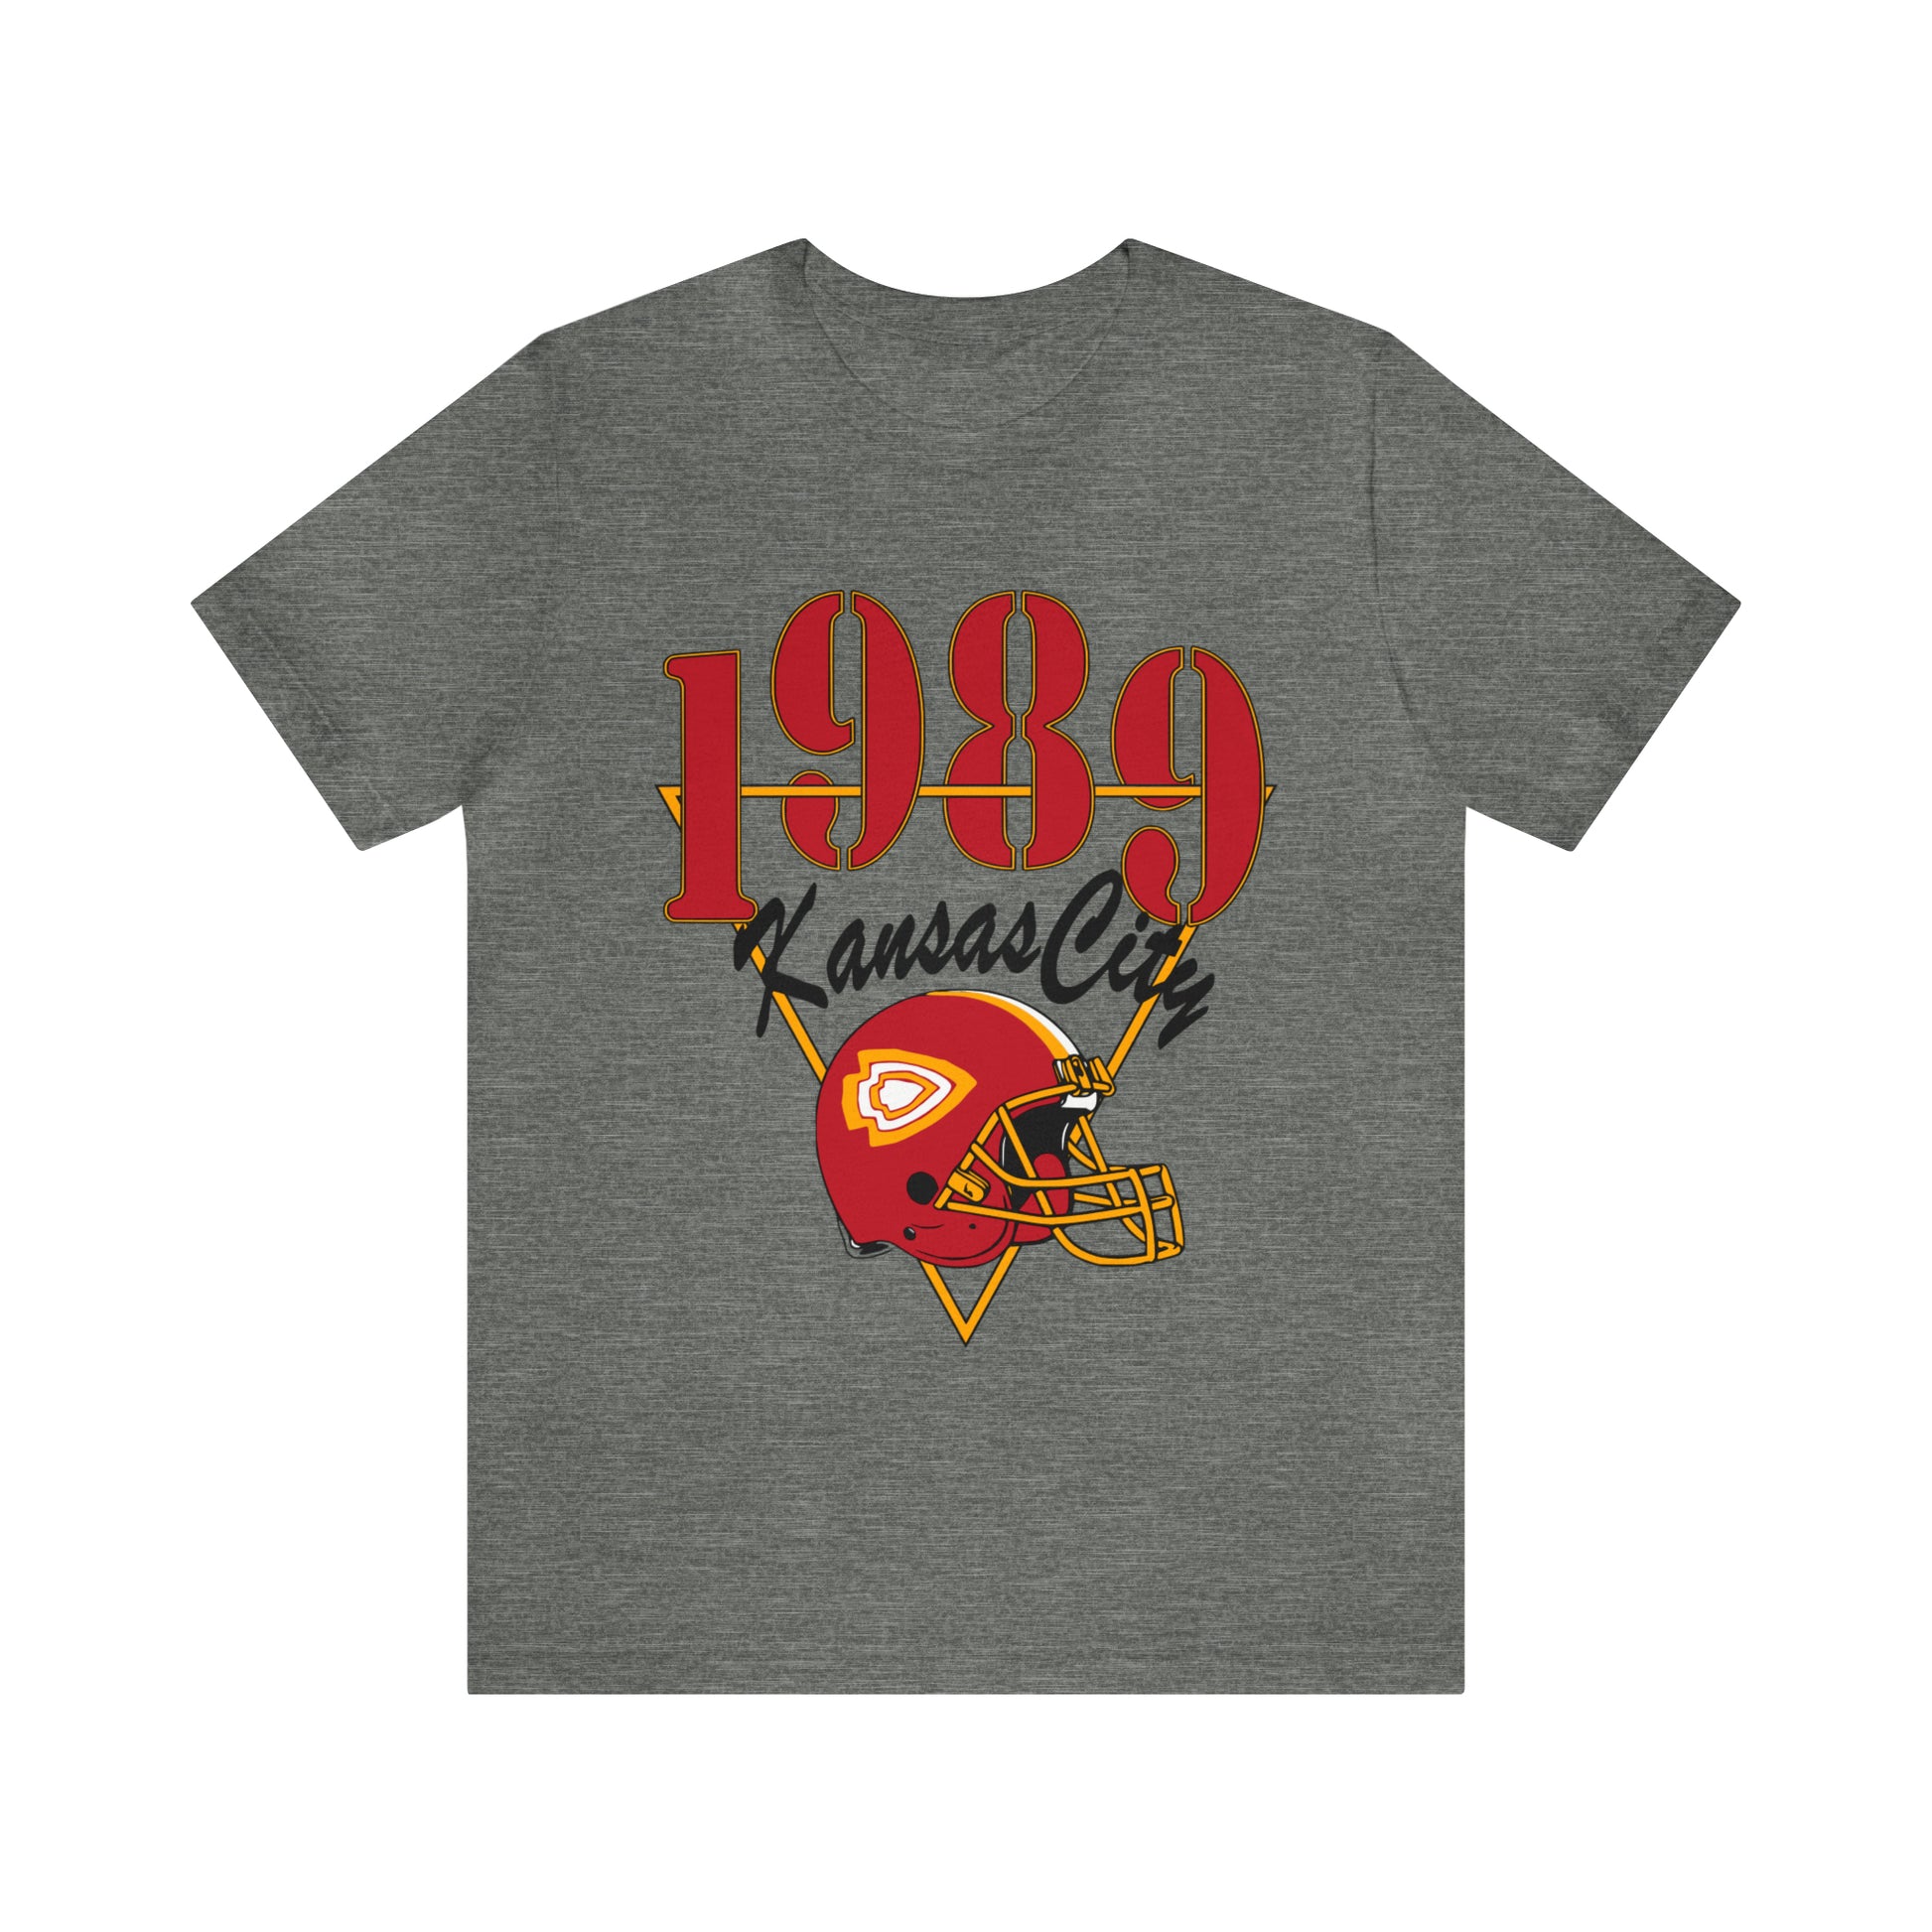 1989 Kansas City Chiefs Football Short Sleeve T-Shirt - Vintage Retro Arrowhead Style - 1989 Version Chiefs Taylor Swift